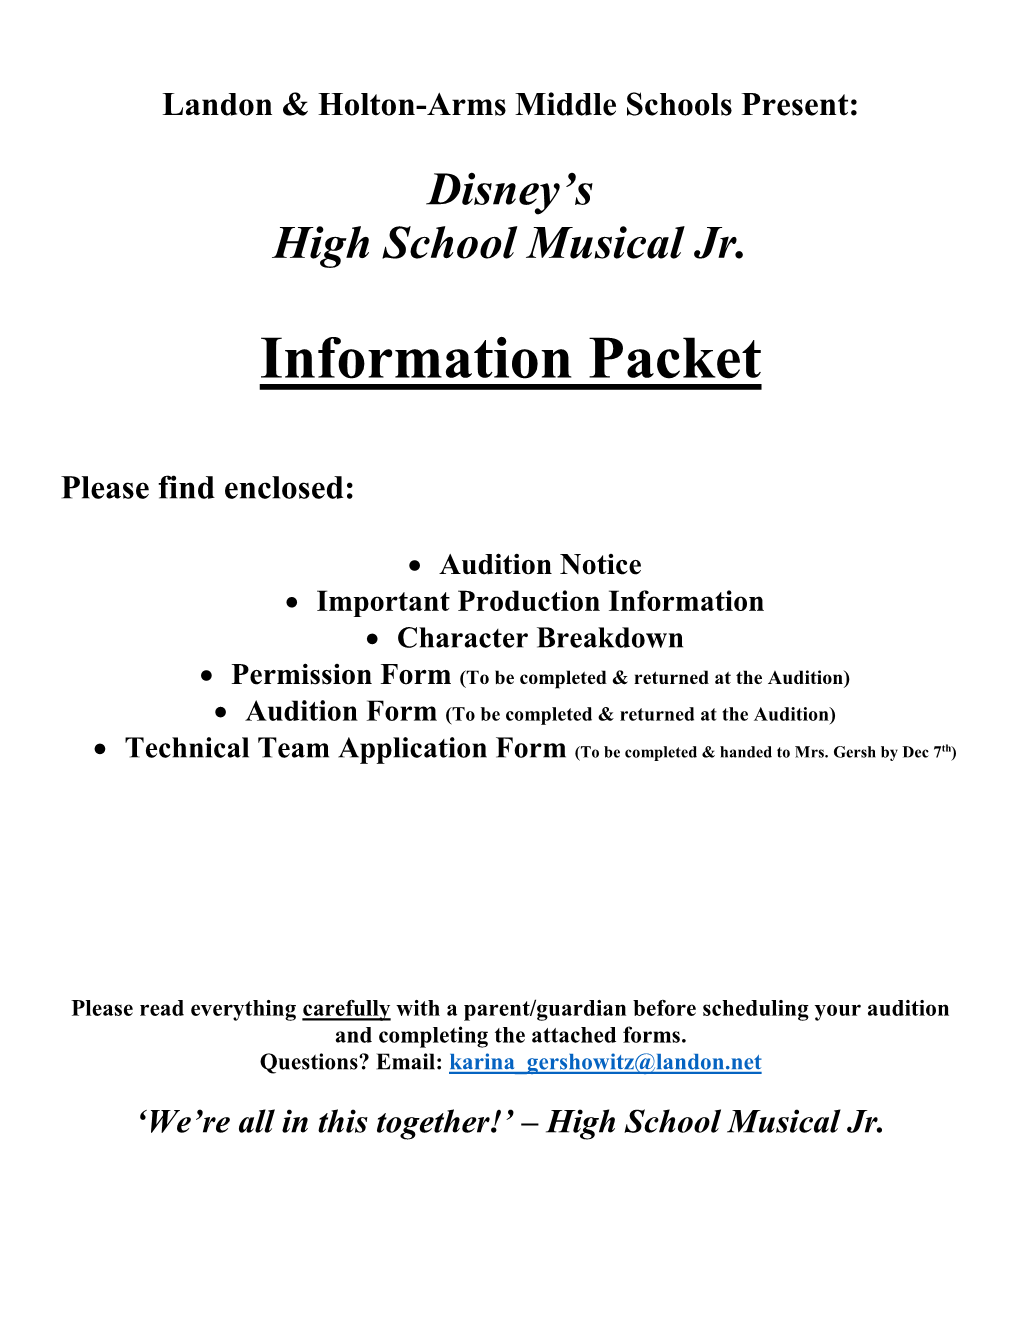 Disney's High School Musical Jr. Information Packet